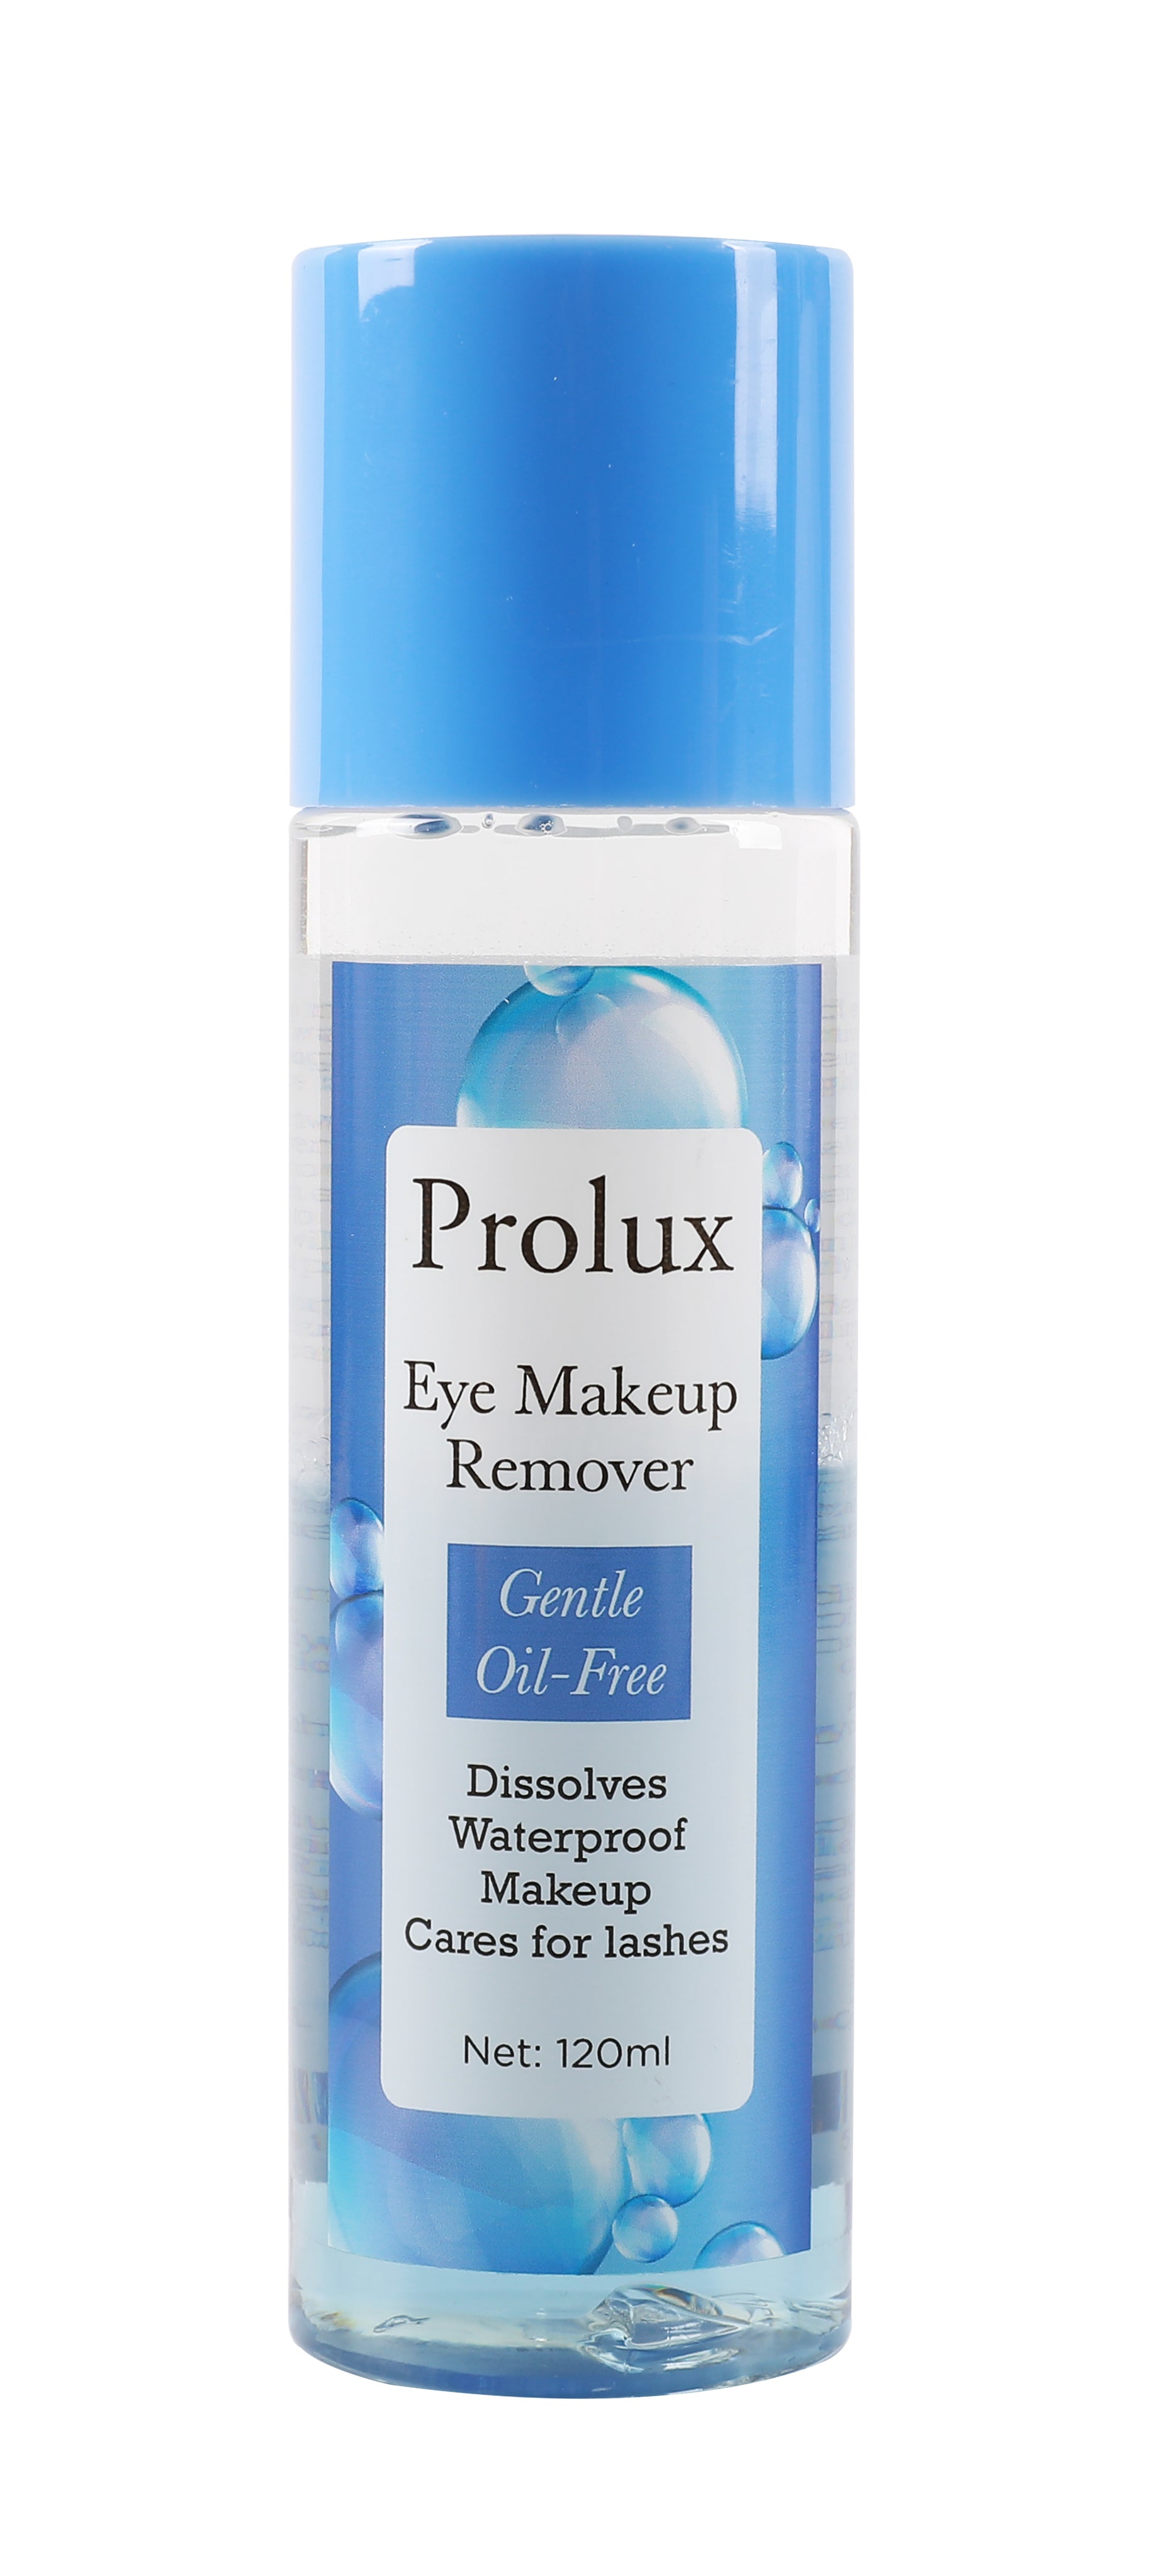 Prolux Eye Makeup Remover